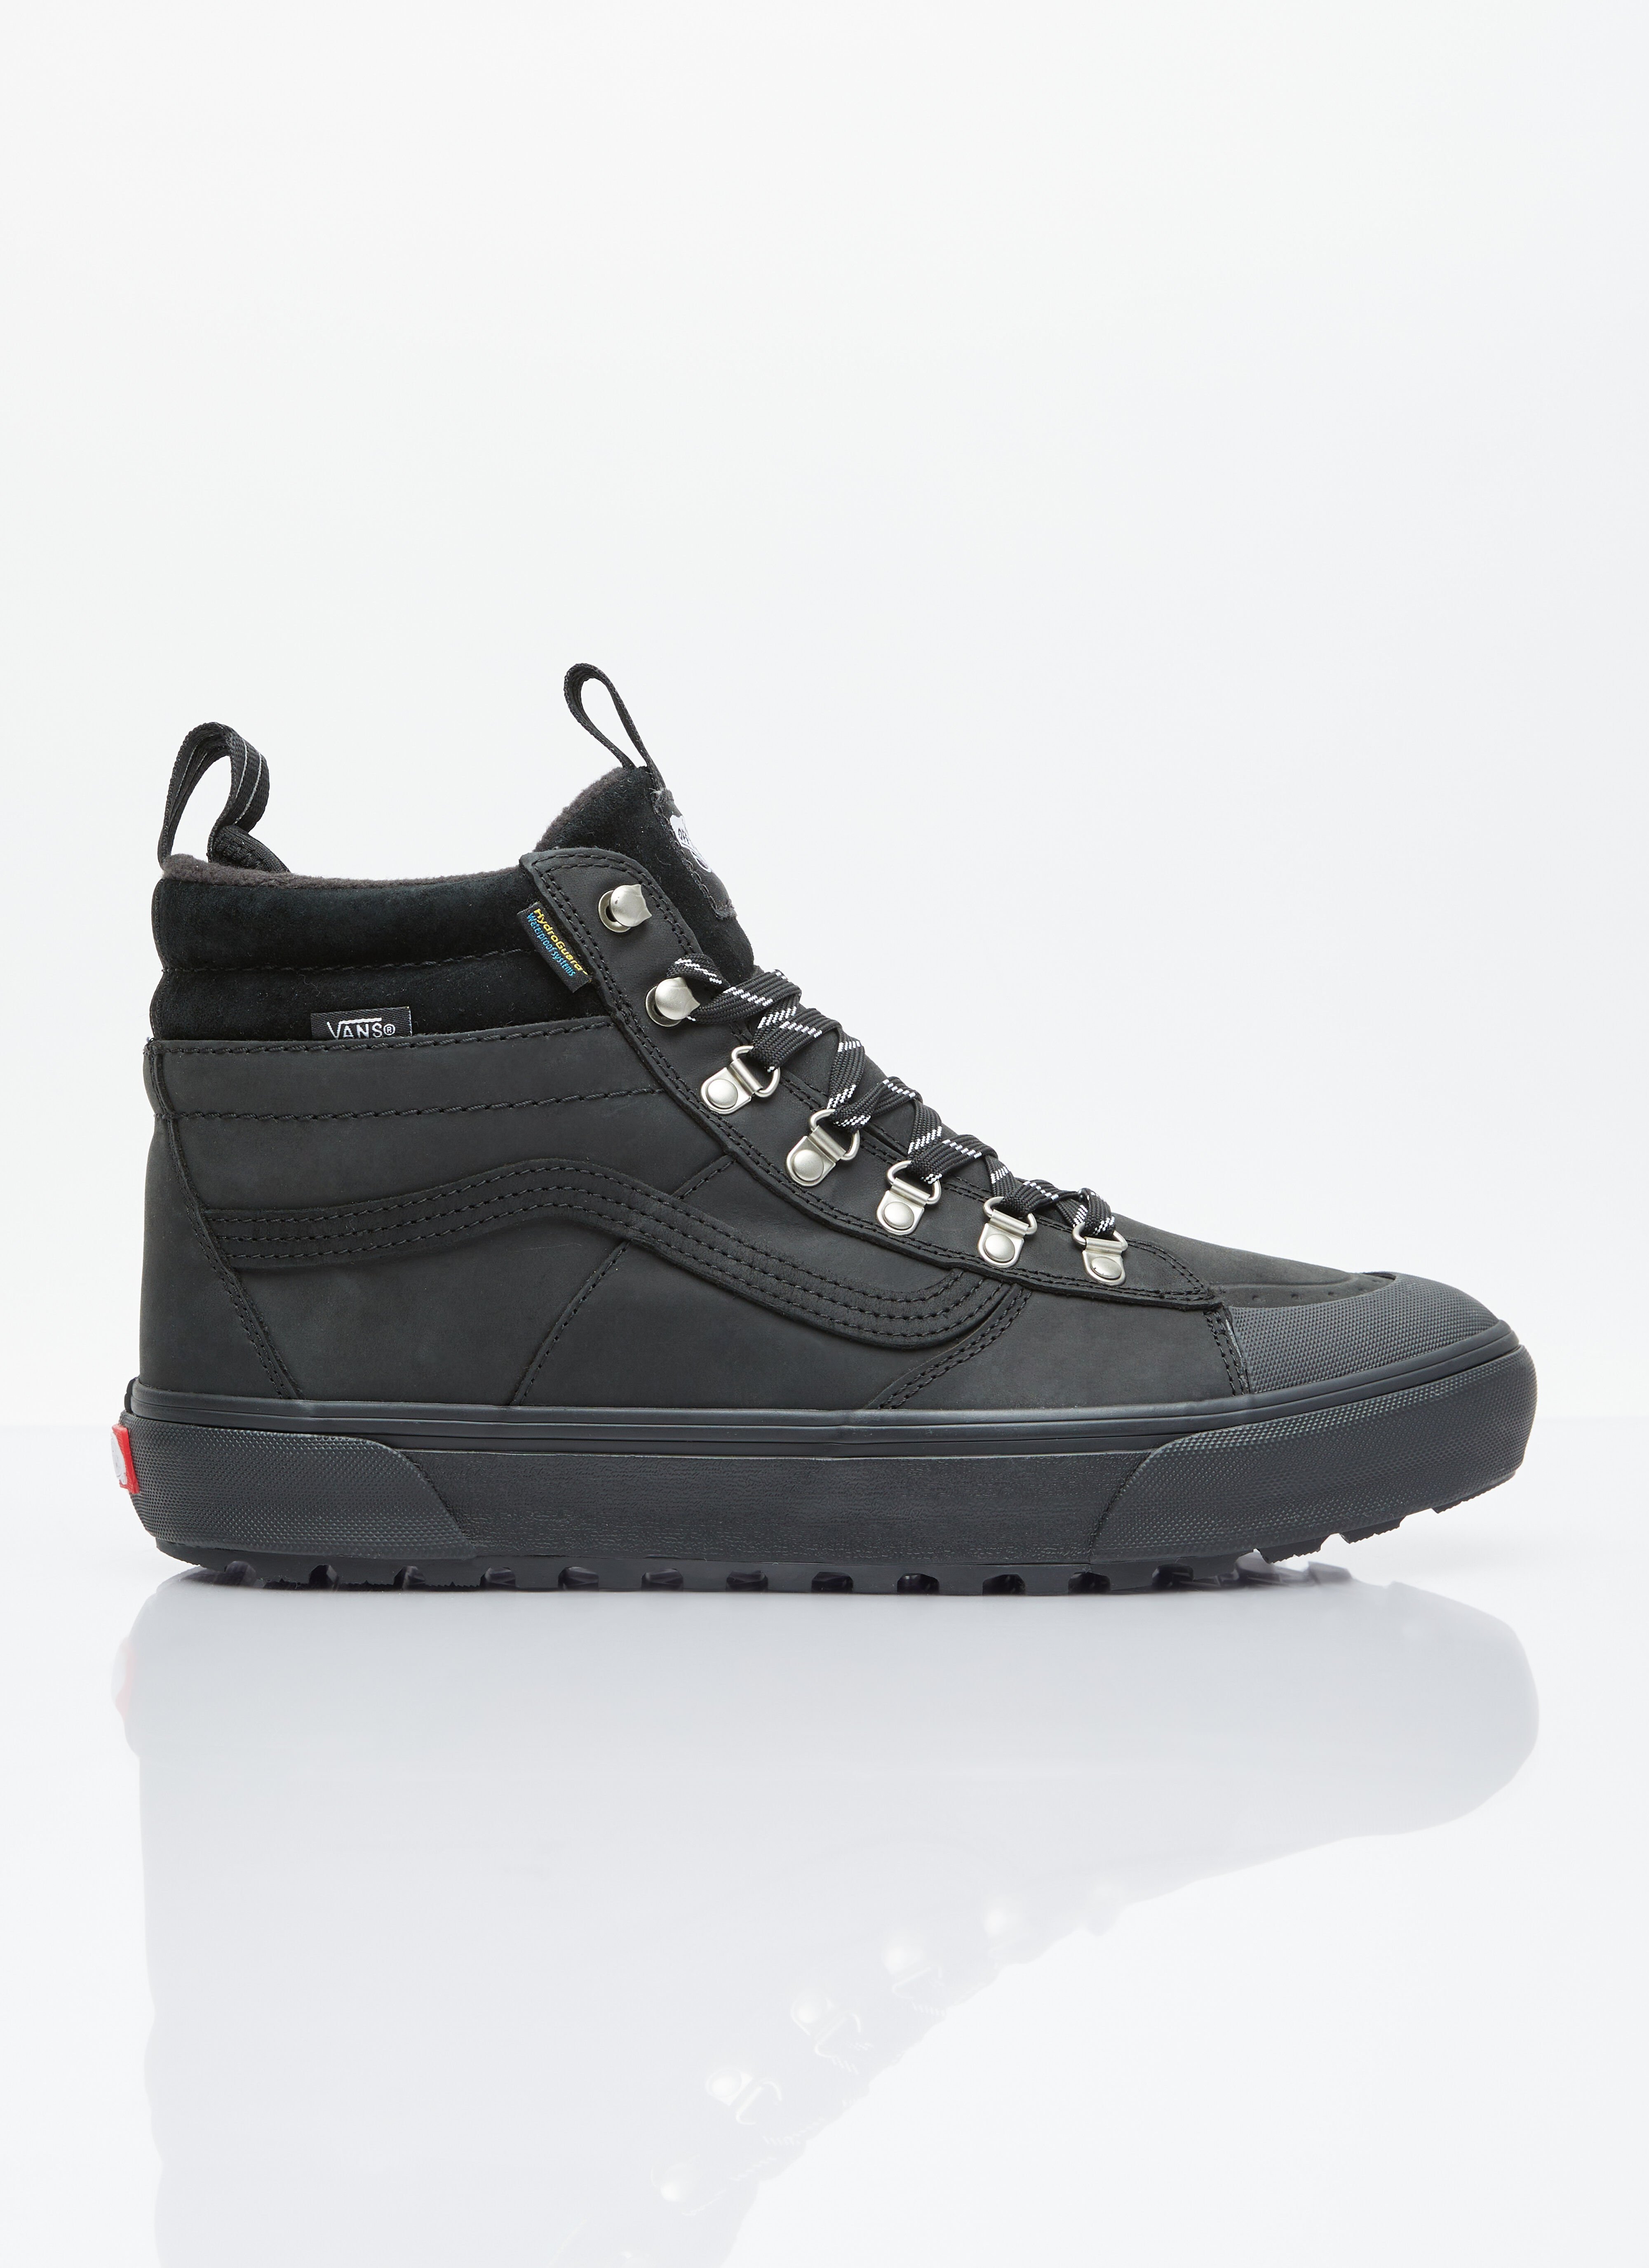 GmbH SK8-Hi MTE-2 Sneakers Black gmb0154001